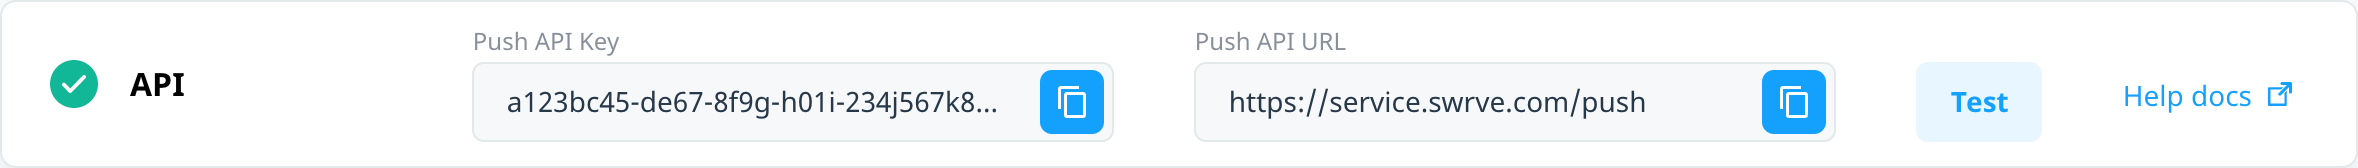 API block with push API key and test button